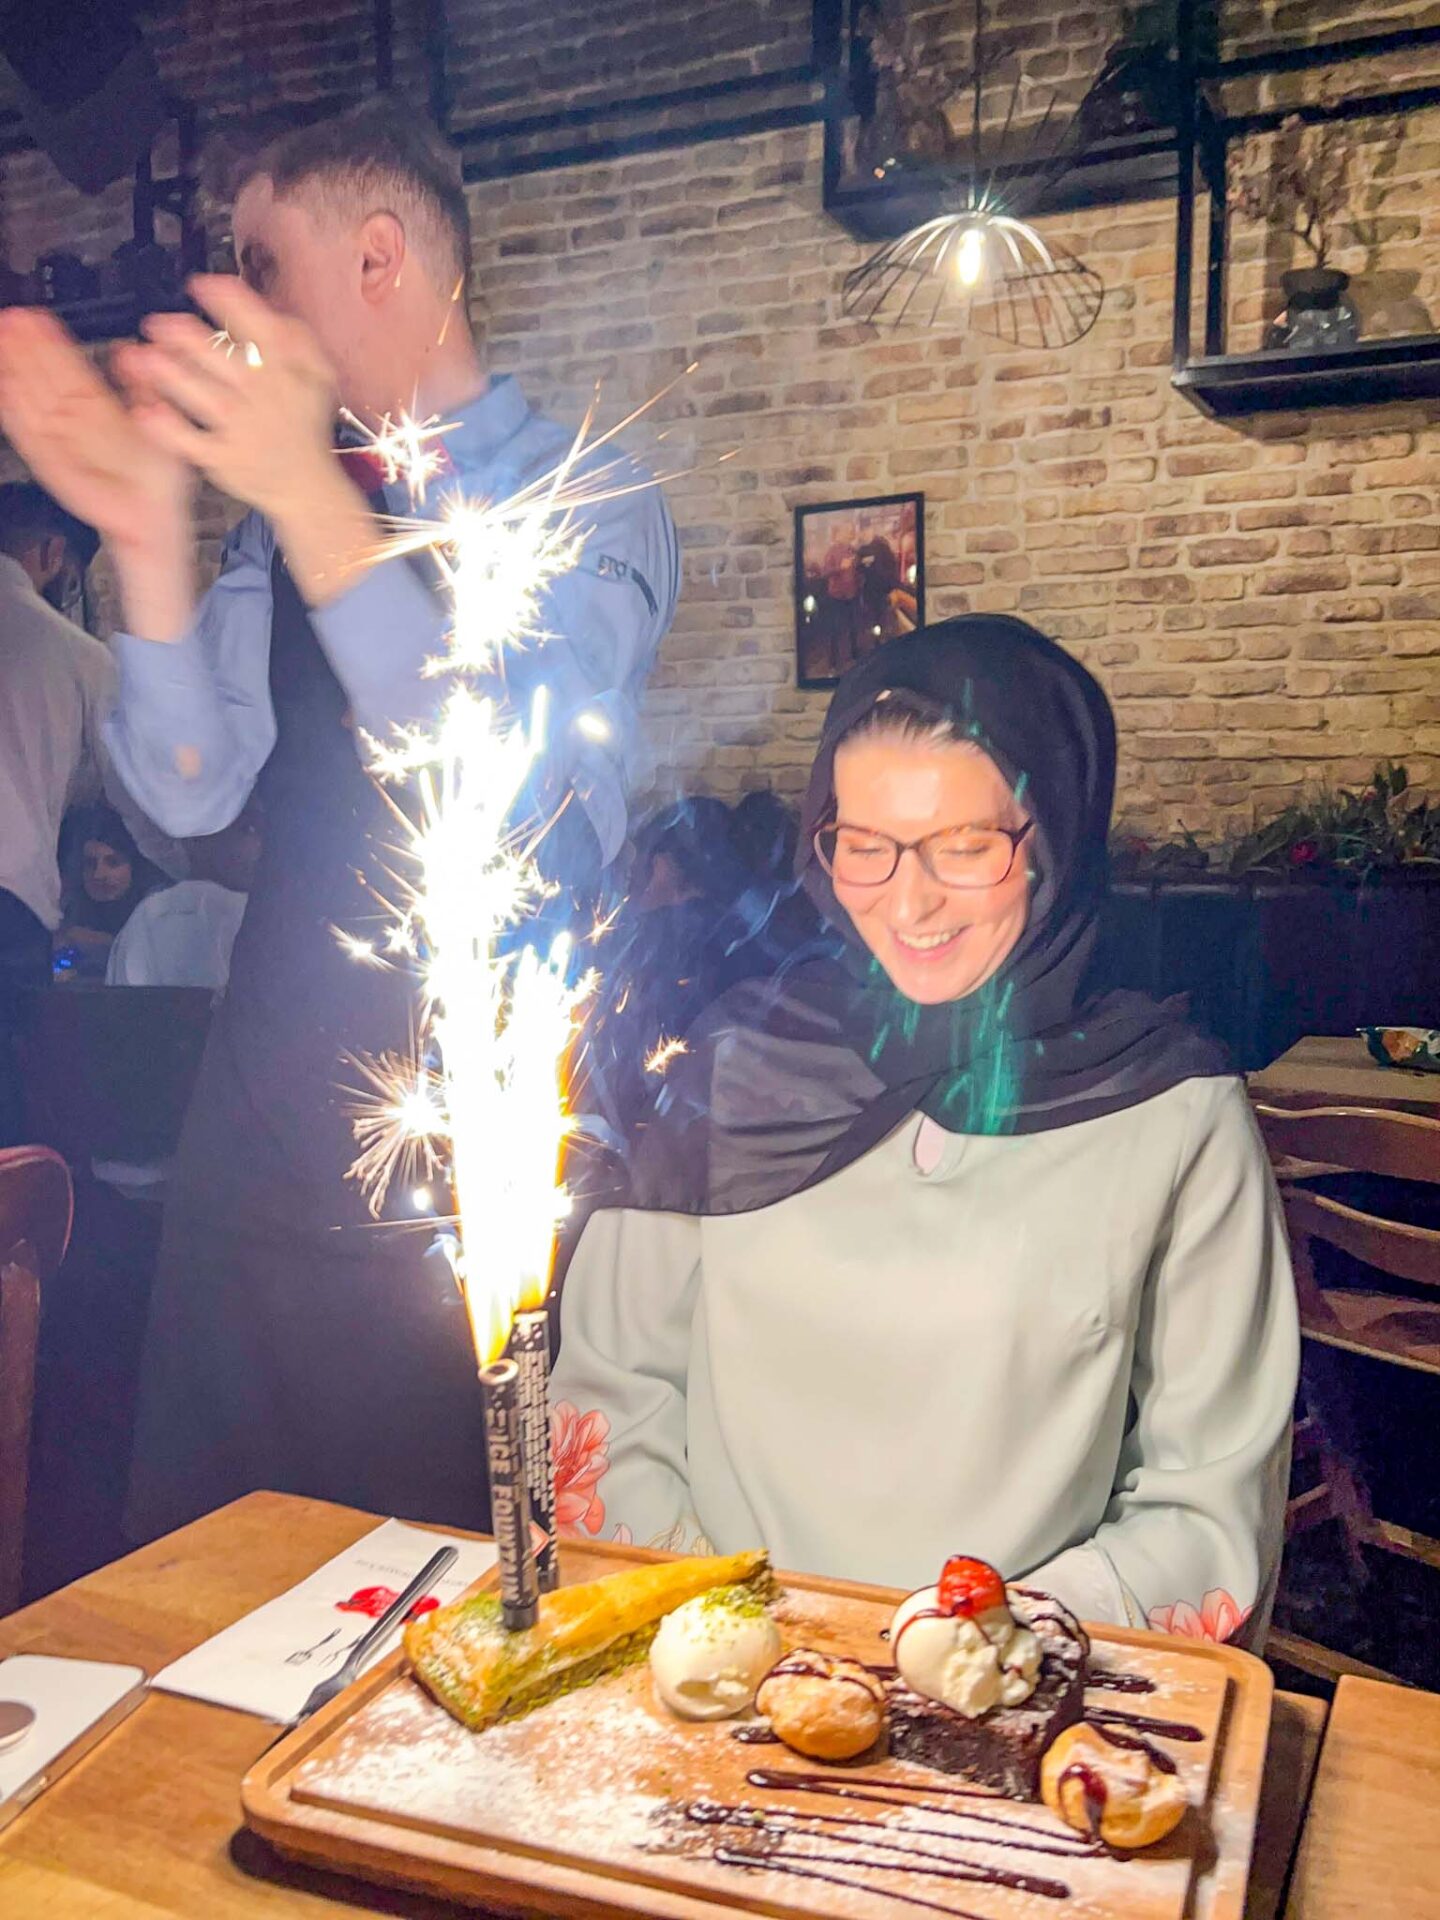 halal restaurants in manchester, Ellie at Etci Mehmet with birthday cake